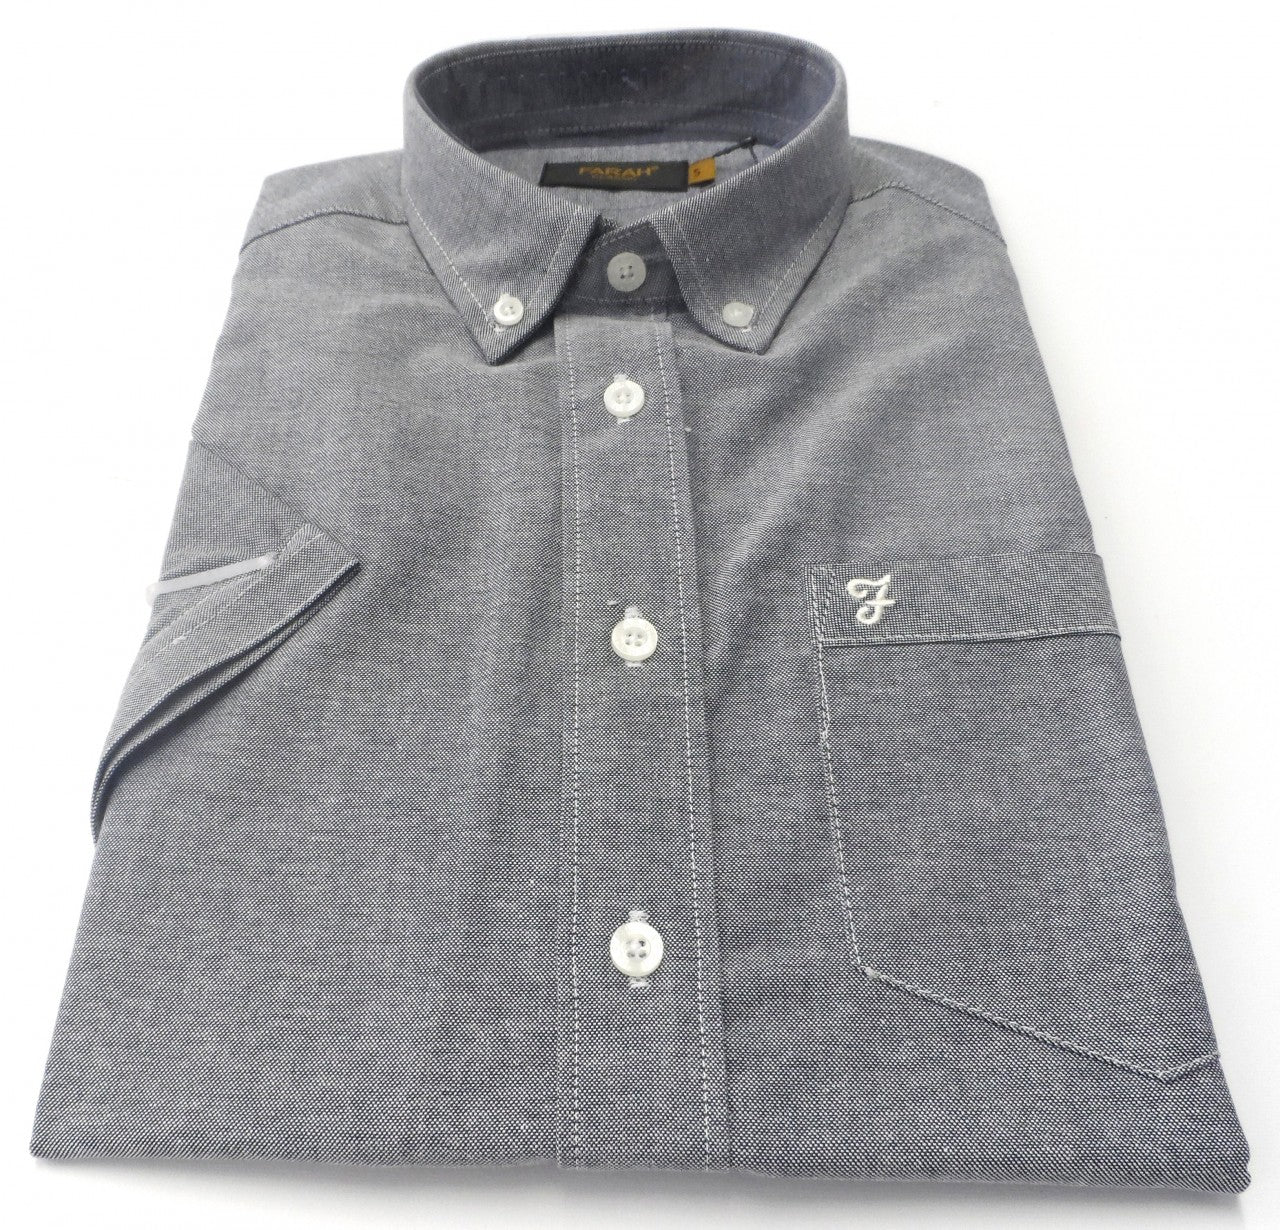 Farah Navy Oxford Cotton Short Sleeved Retro Mod Button Down Shirts